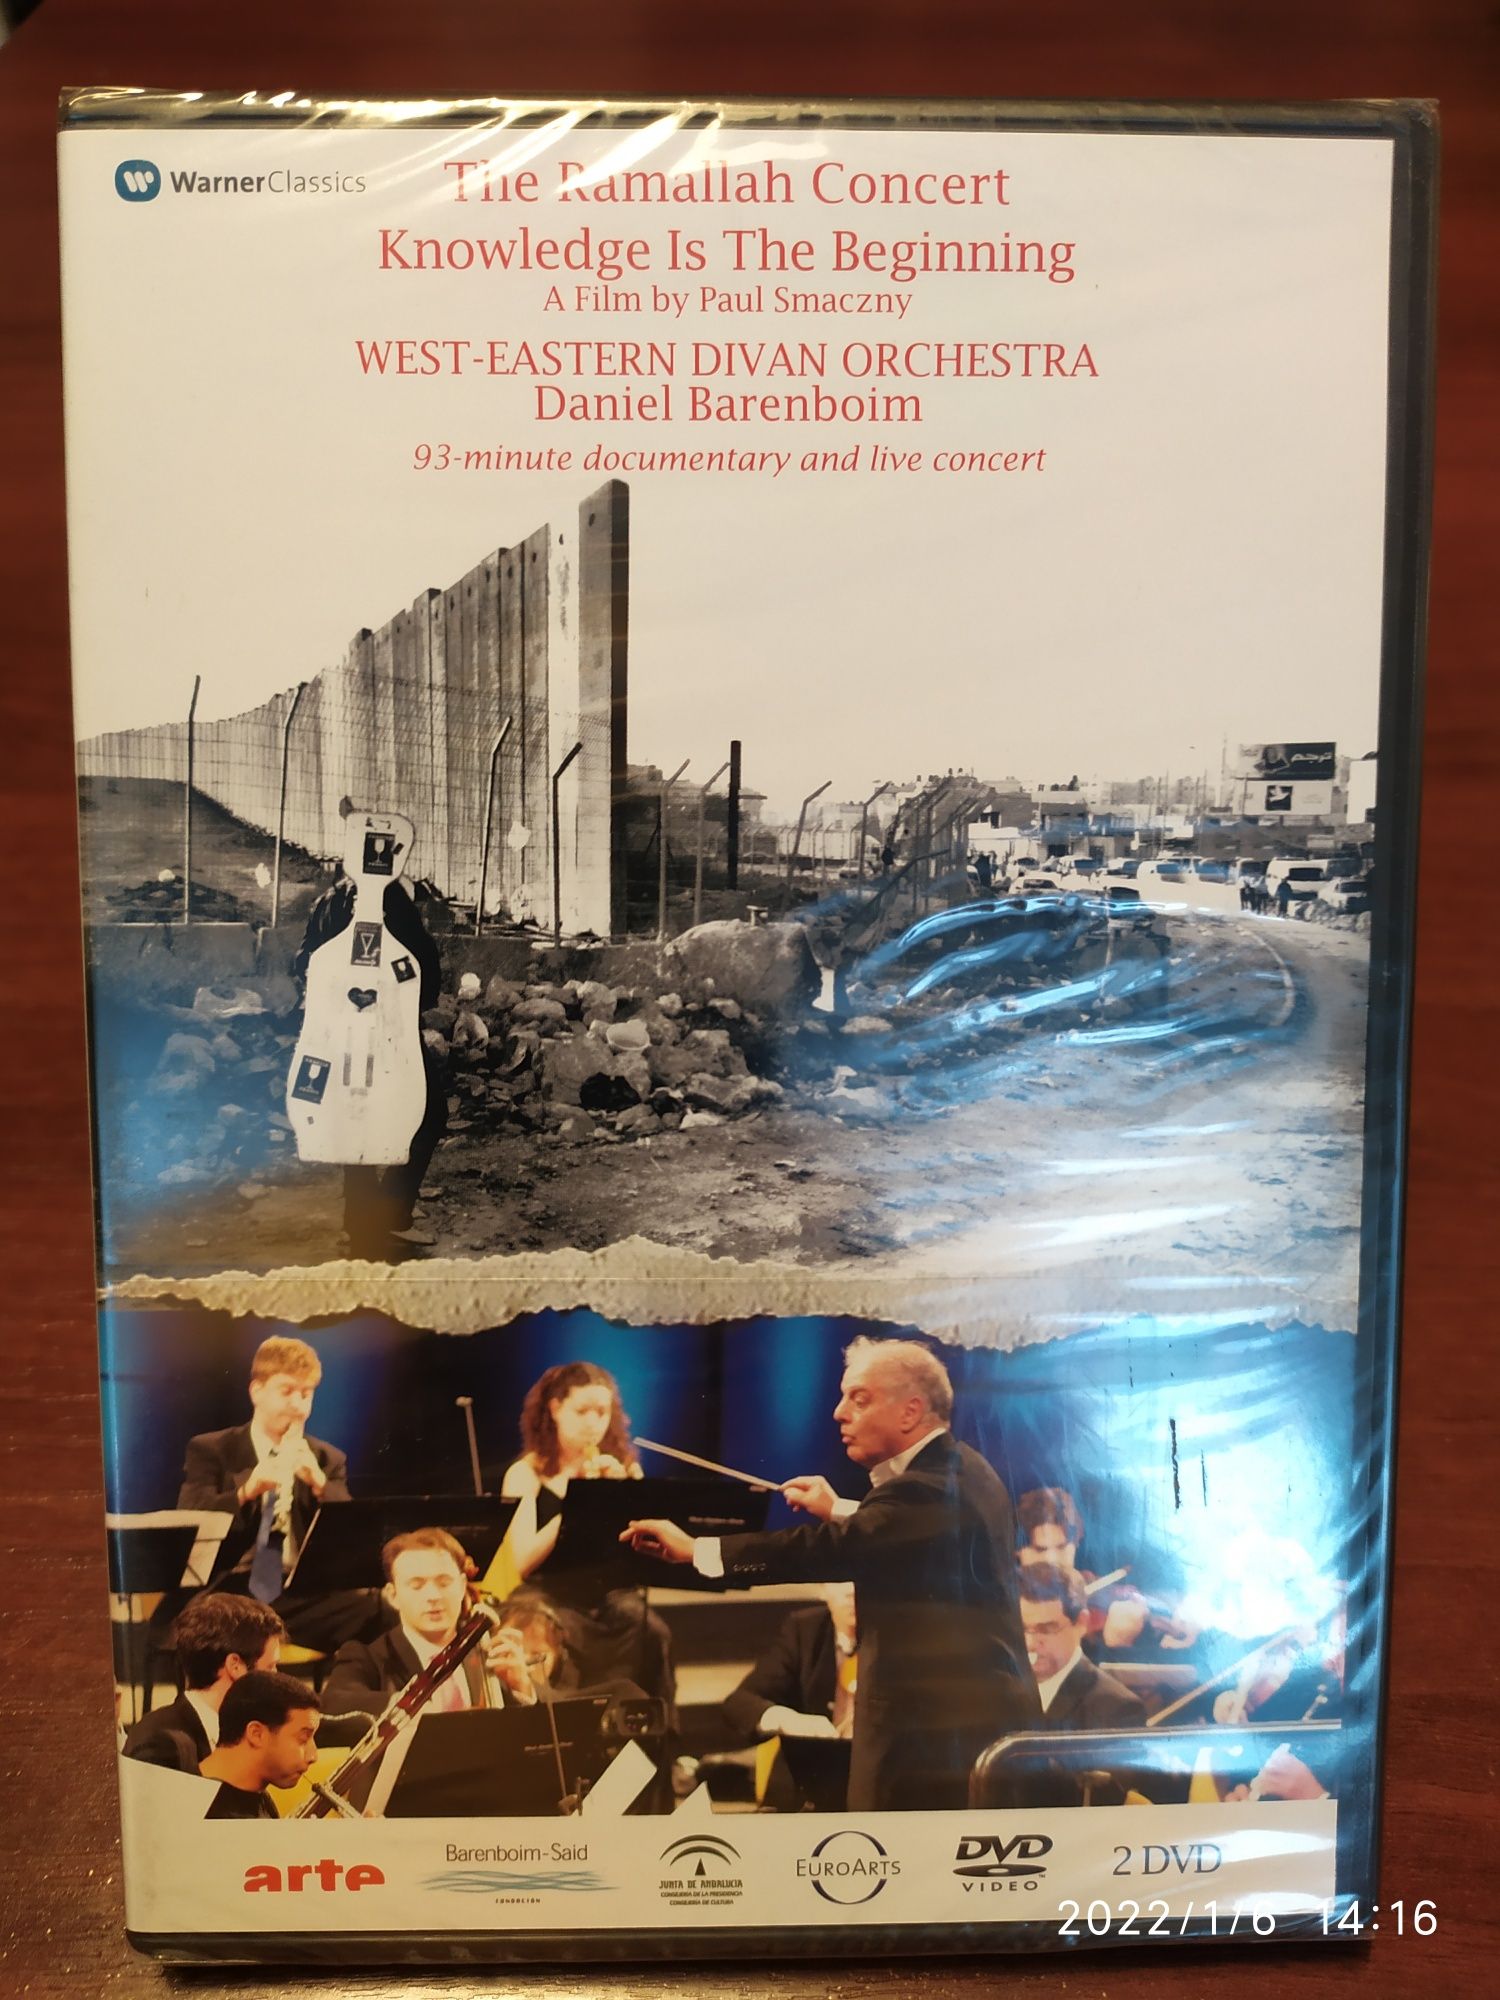 The Ramallah Concert: West-Eastern Divan Orchestra
DVD